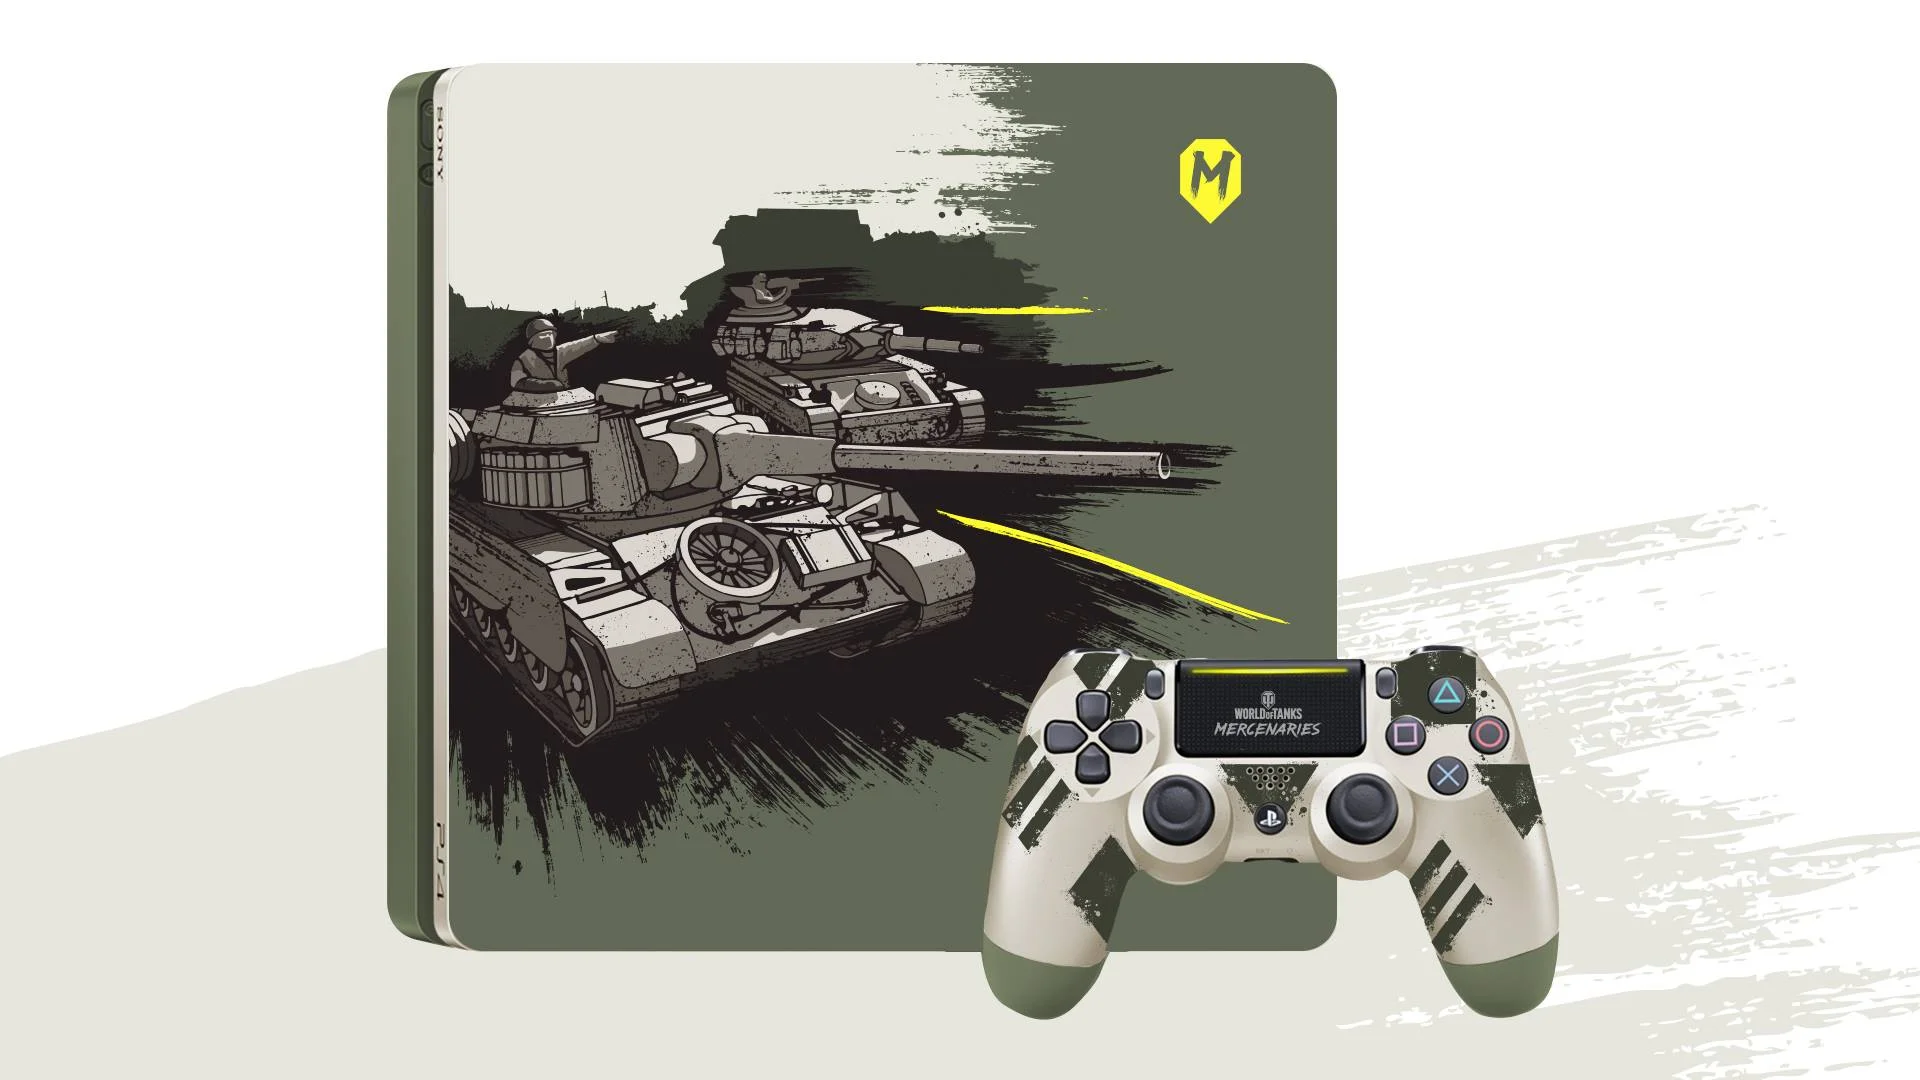 «Канобу» дарит брендированную PS4 зрителю стрима по World of Tanks: Mercenaries (итоги) - фото 1